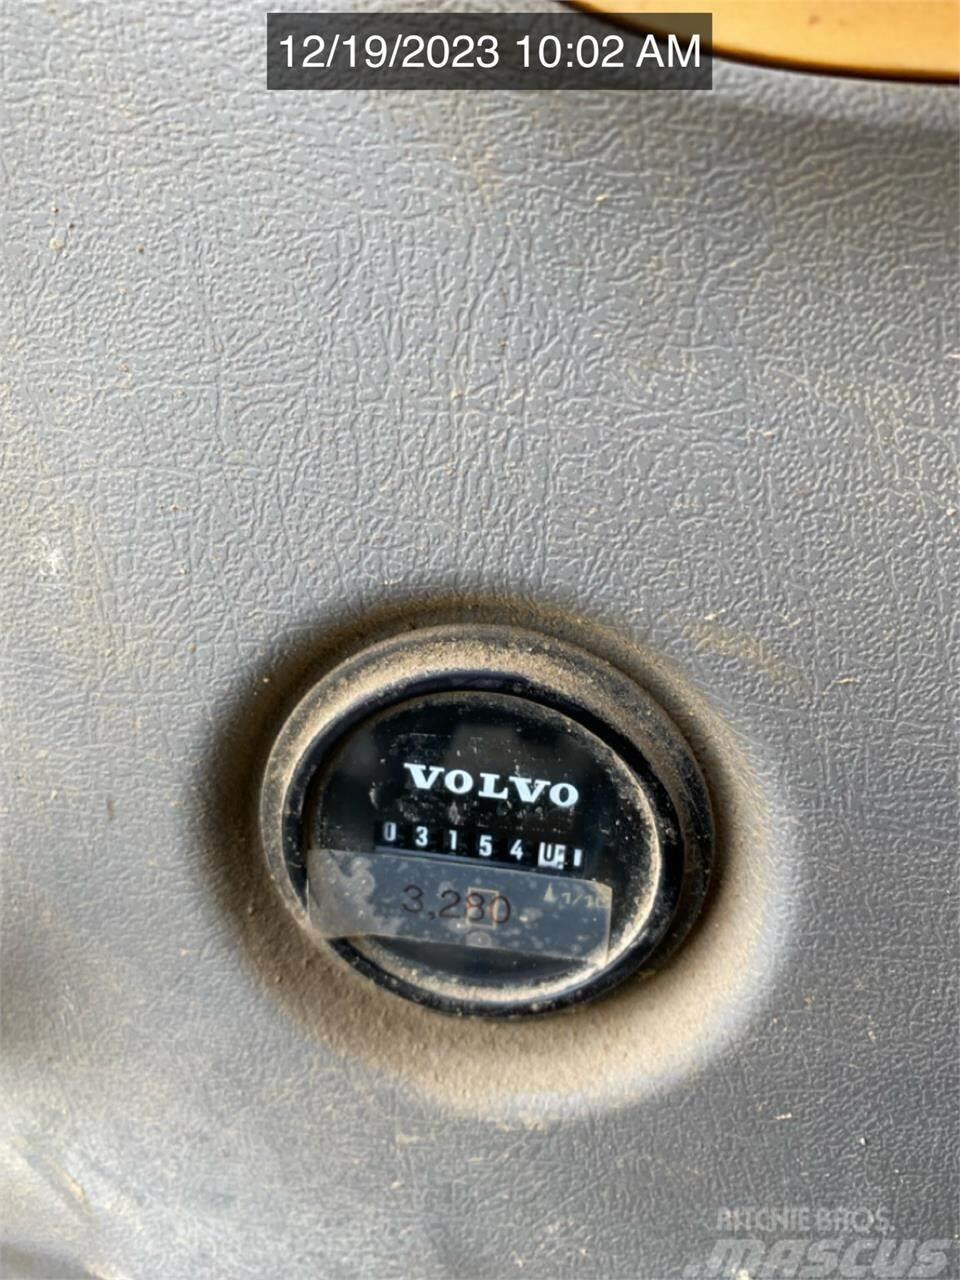 Volvo ECR88D Excavatoare pe senile